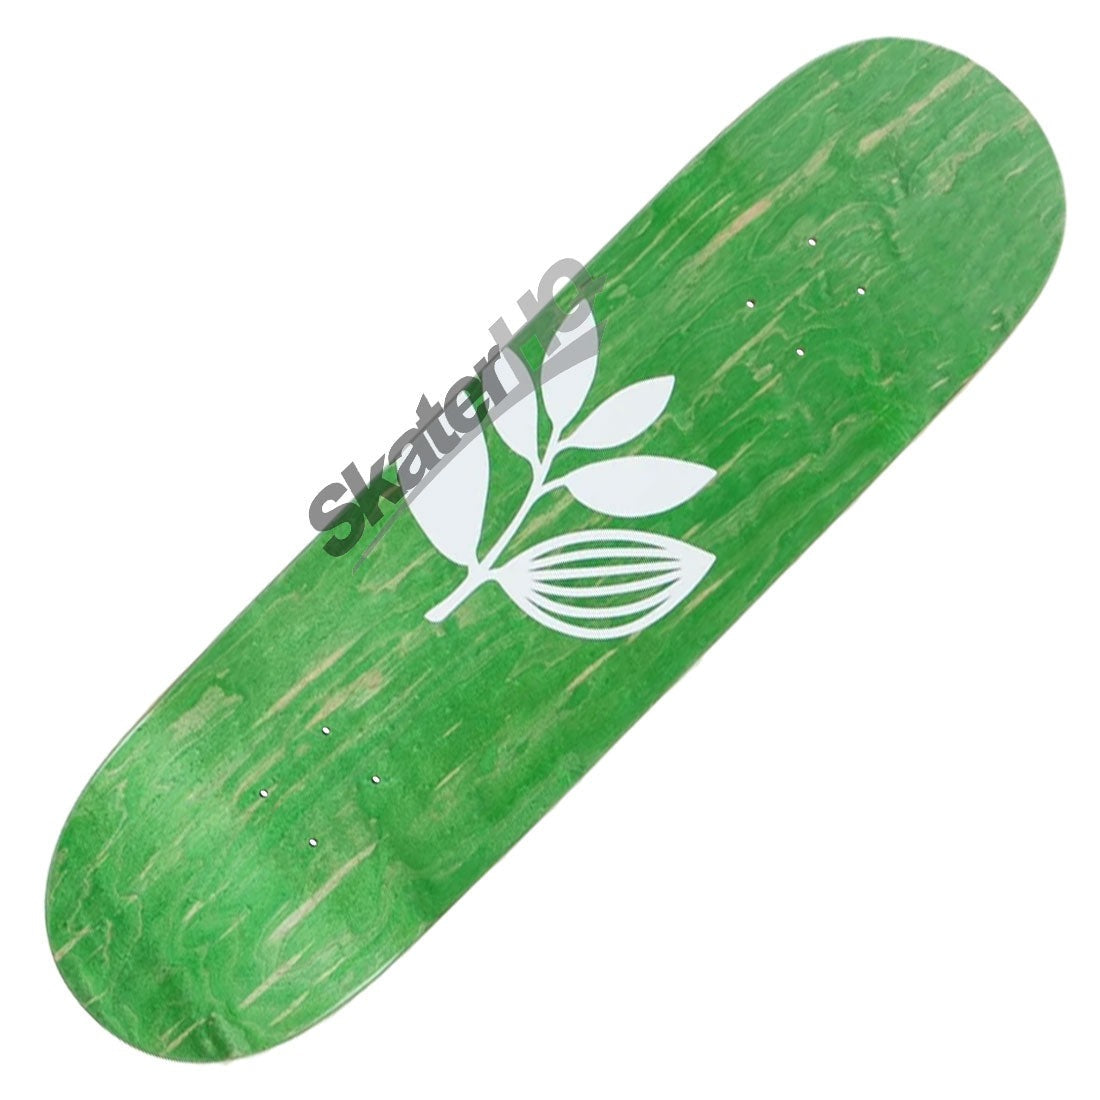 Magenta Big Plant Team 8.25 Deck - Green Skateboard Decks Modern Street